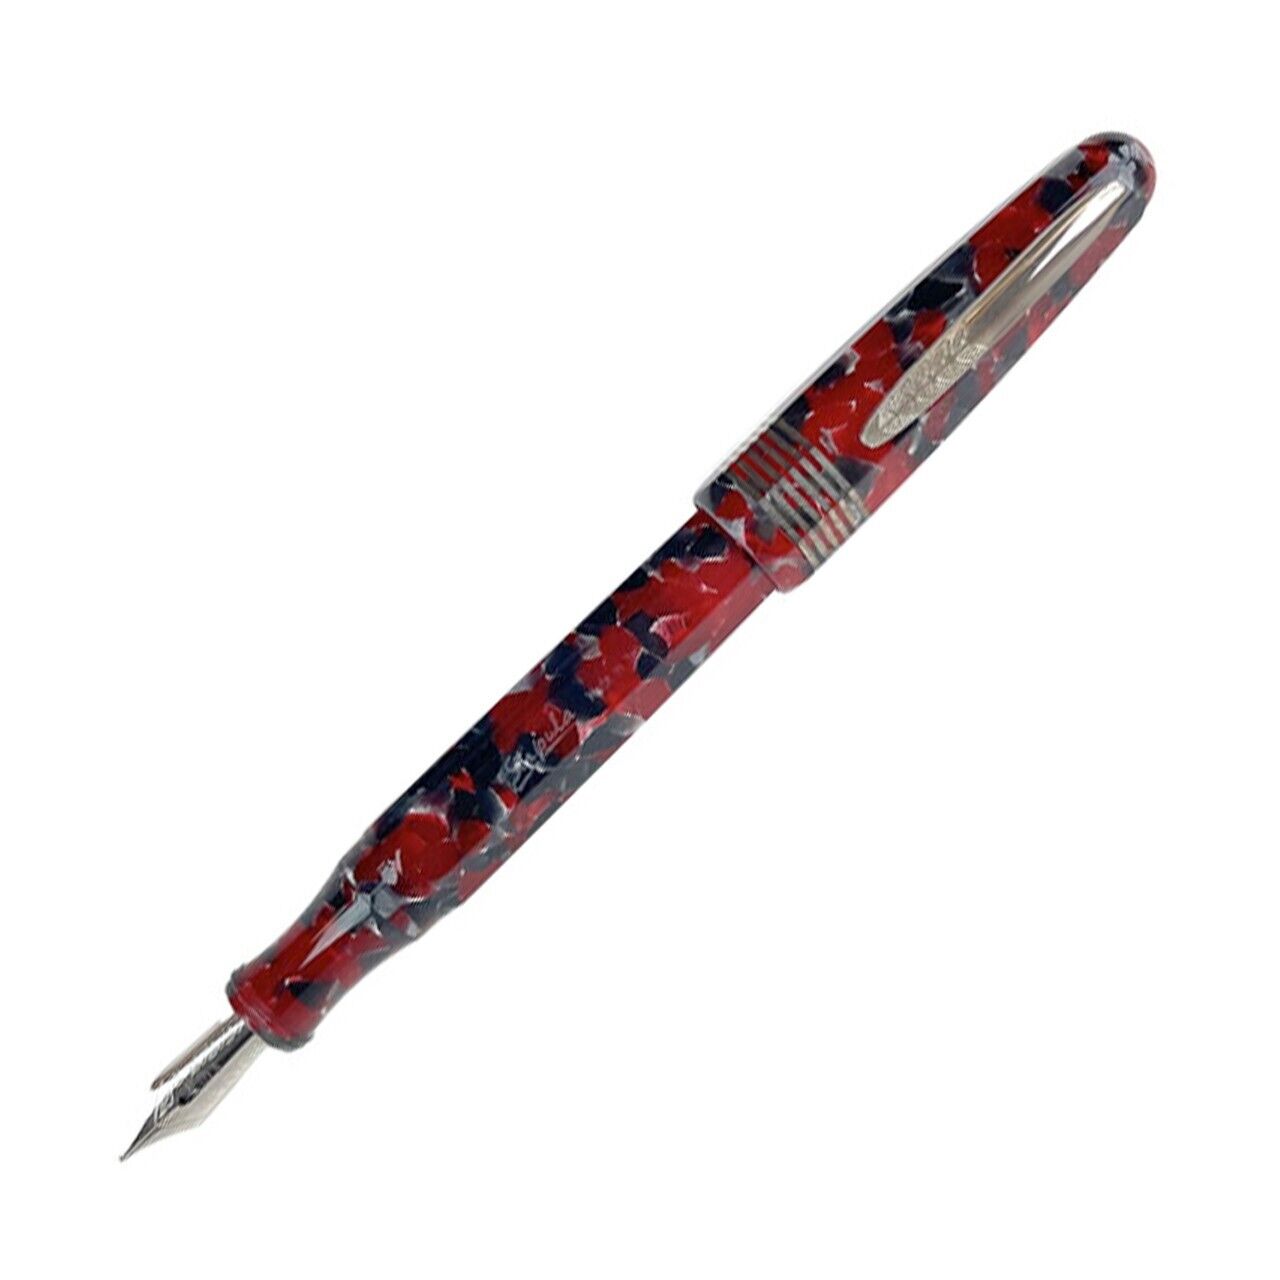 Stipula Faceted Etruria Red Currant Fountain Pen 18K FINE nib New #52/88 made